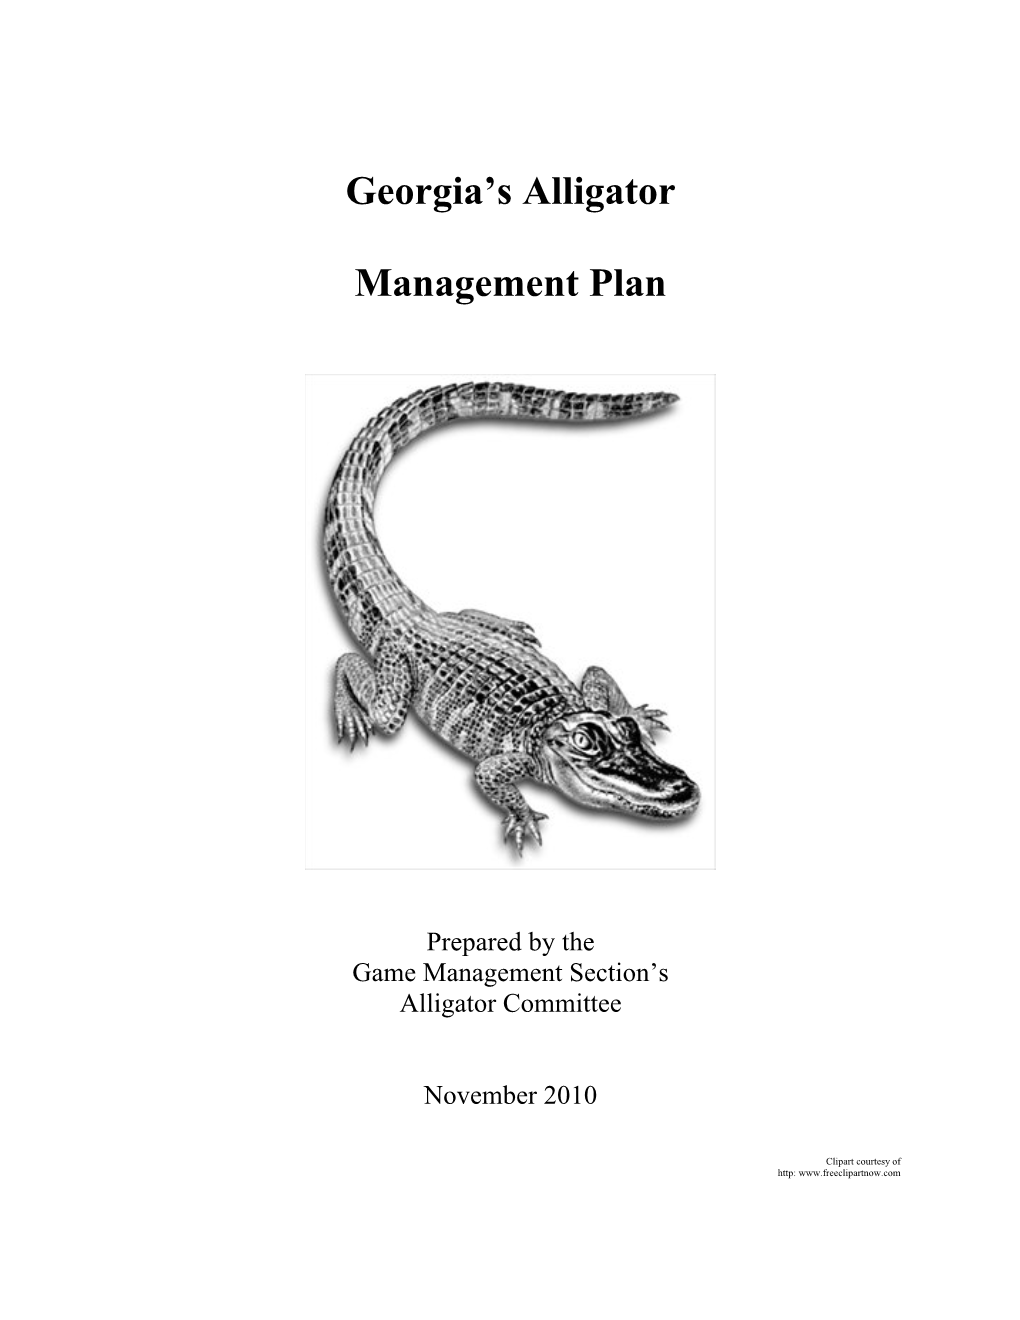 Alligator Management Plan